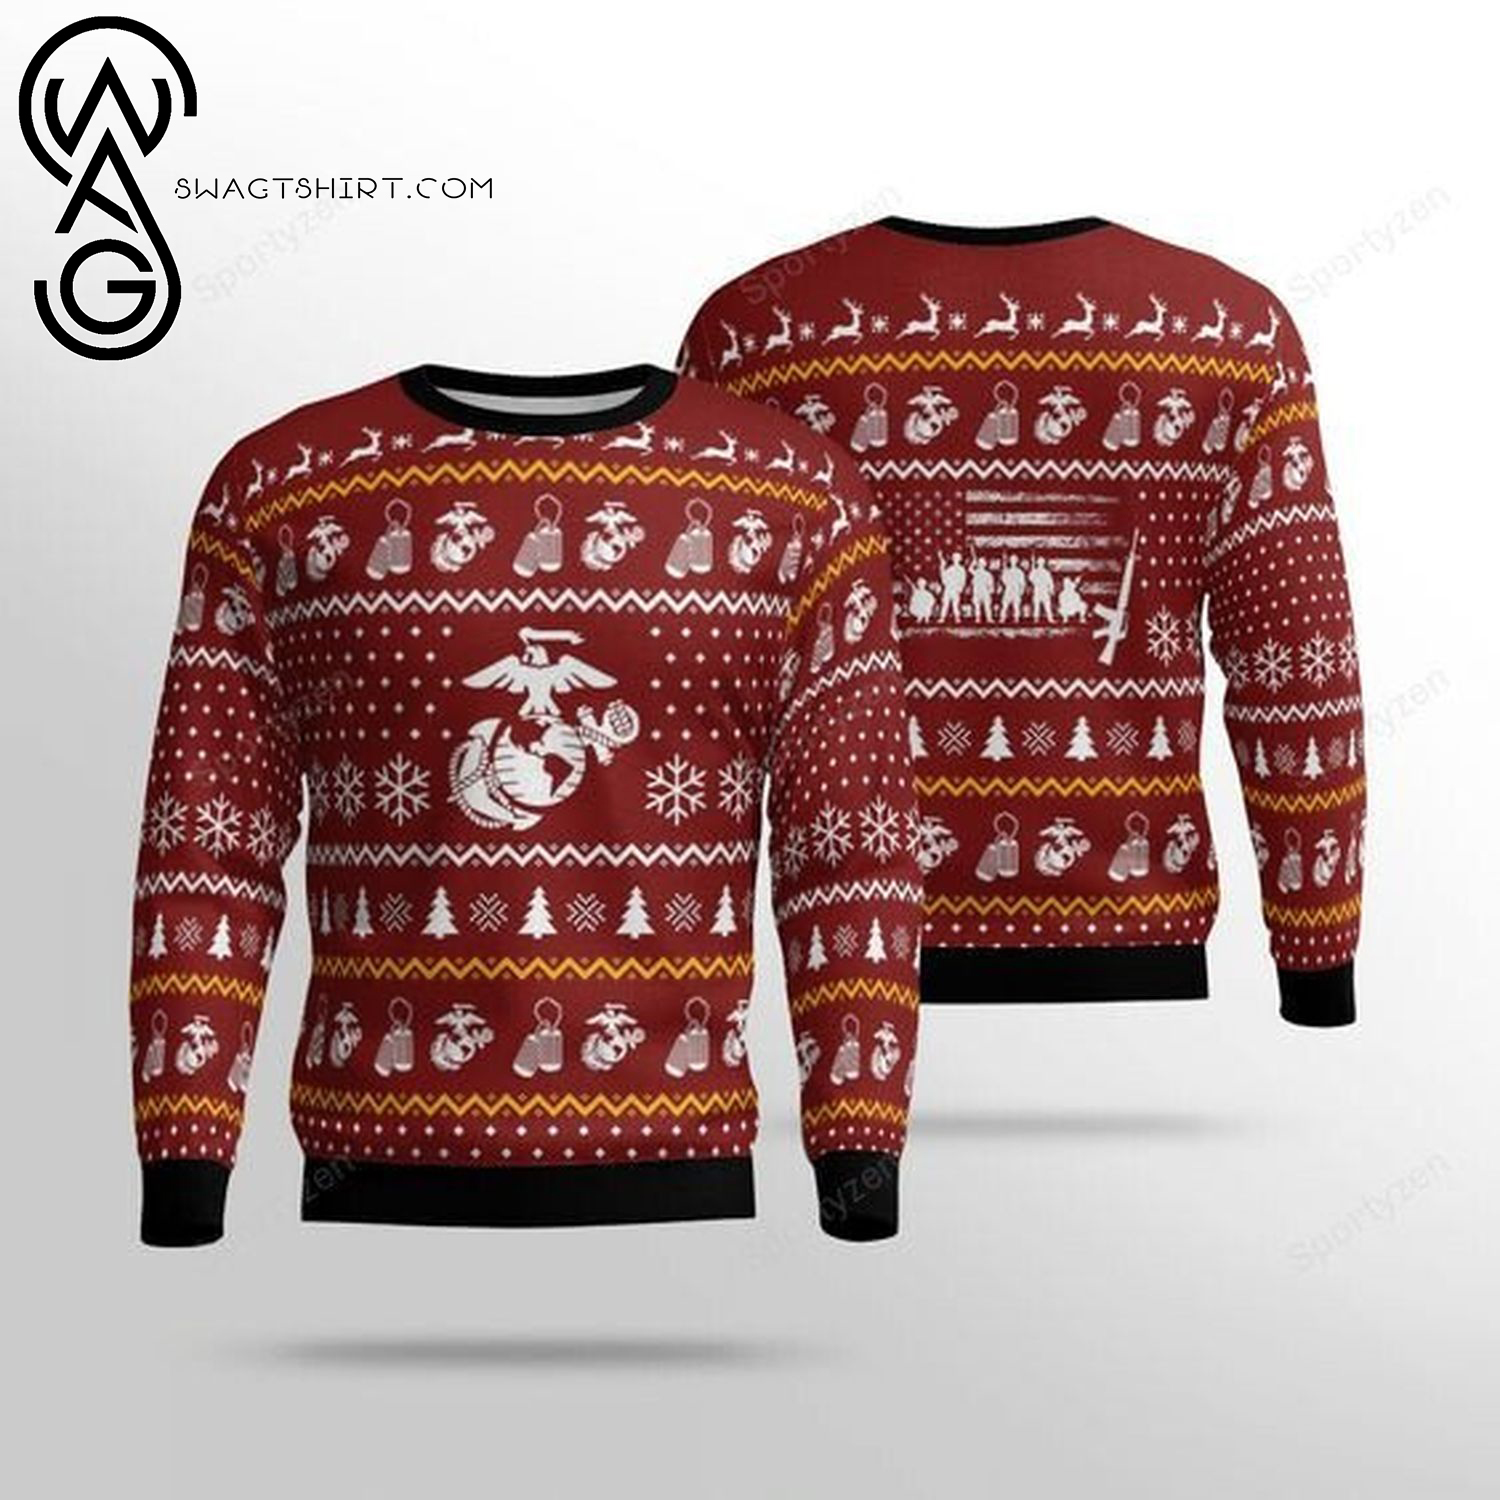 United States Marine Corps Full Print Ugly Christmas Sweater